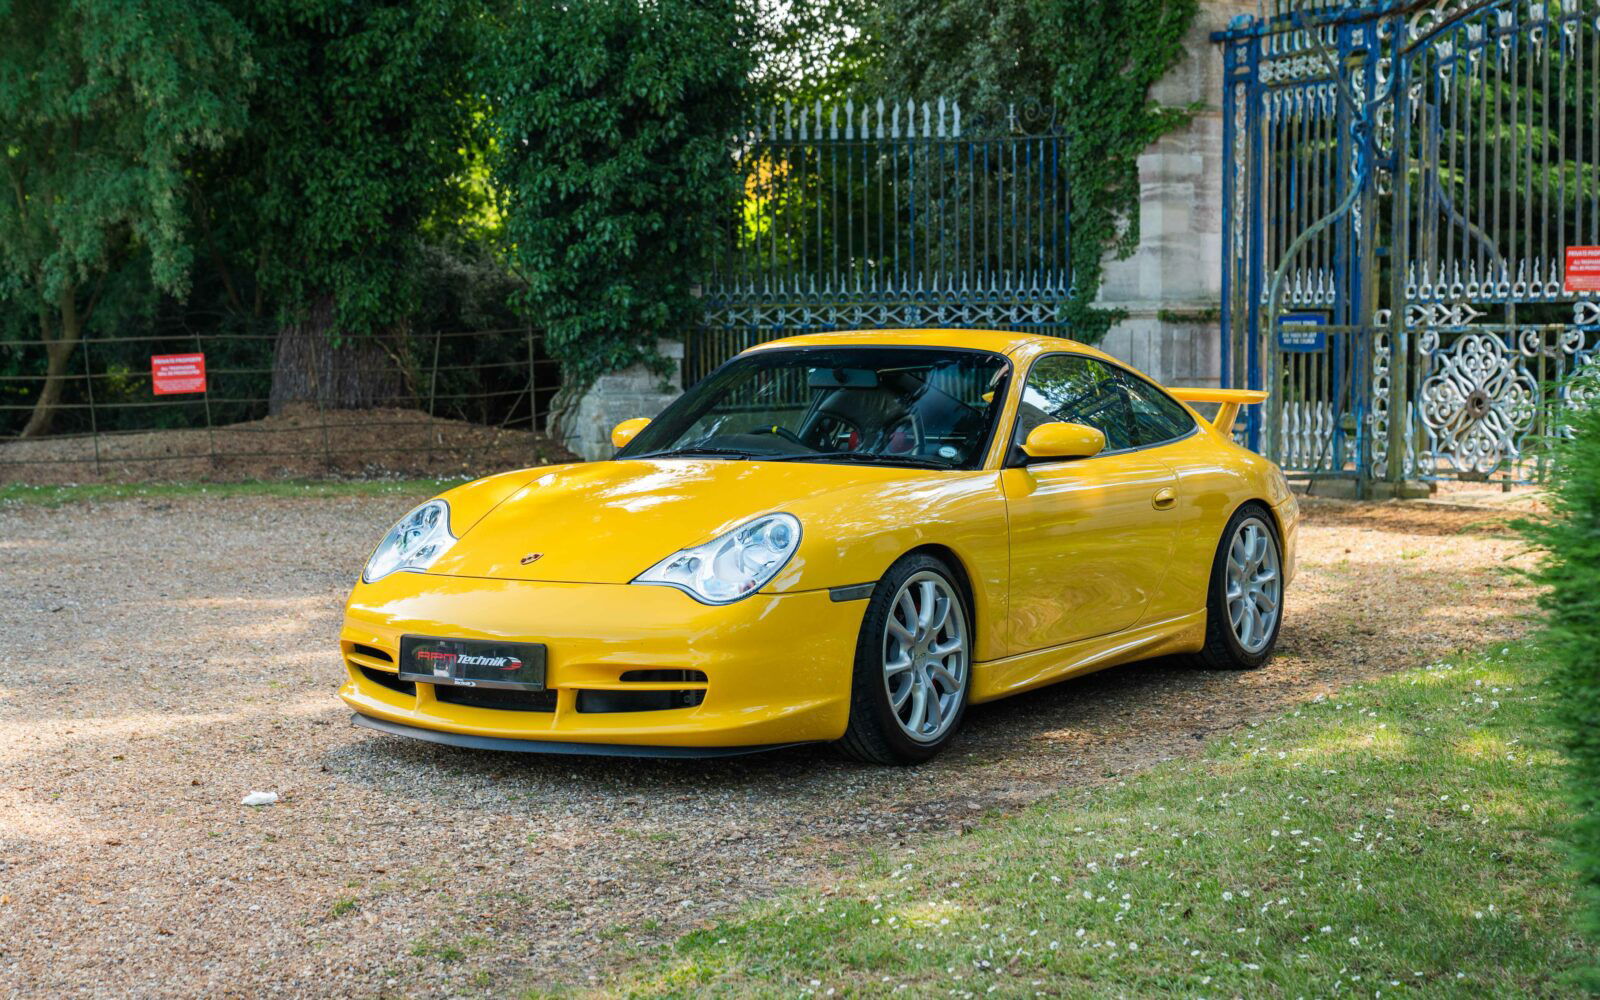 Porsche 911 Yellow for sale - Elferspot - Marketplace for used Porsche